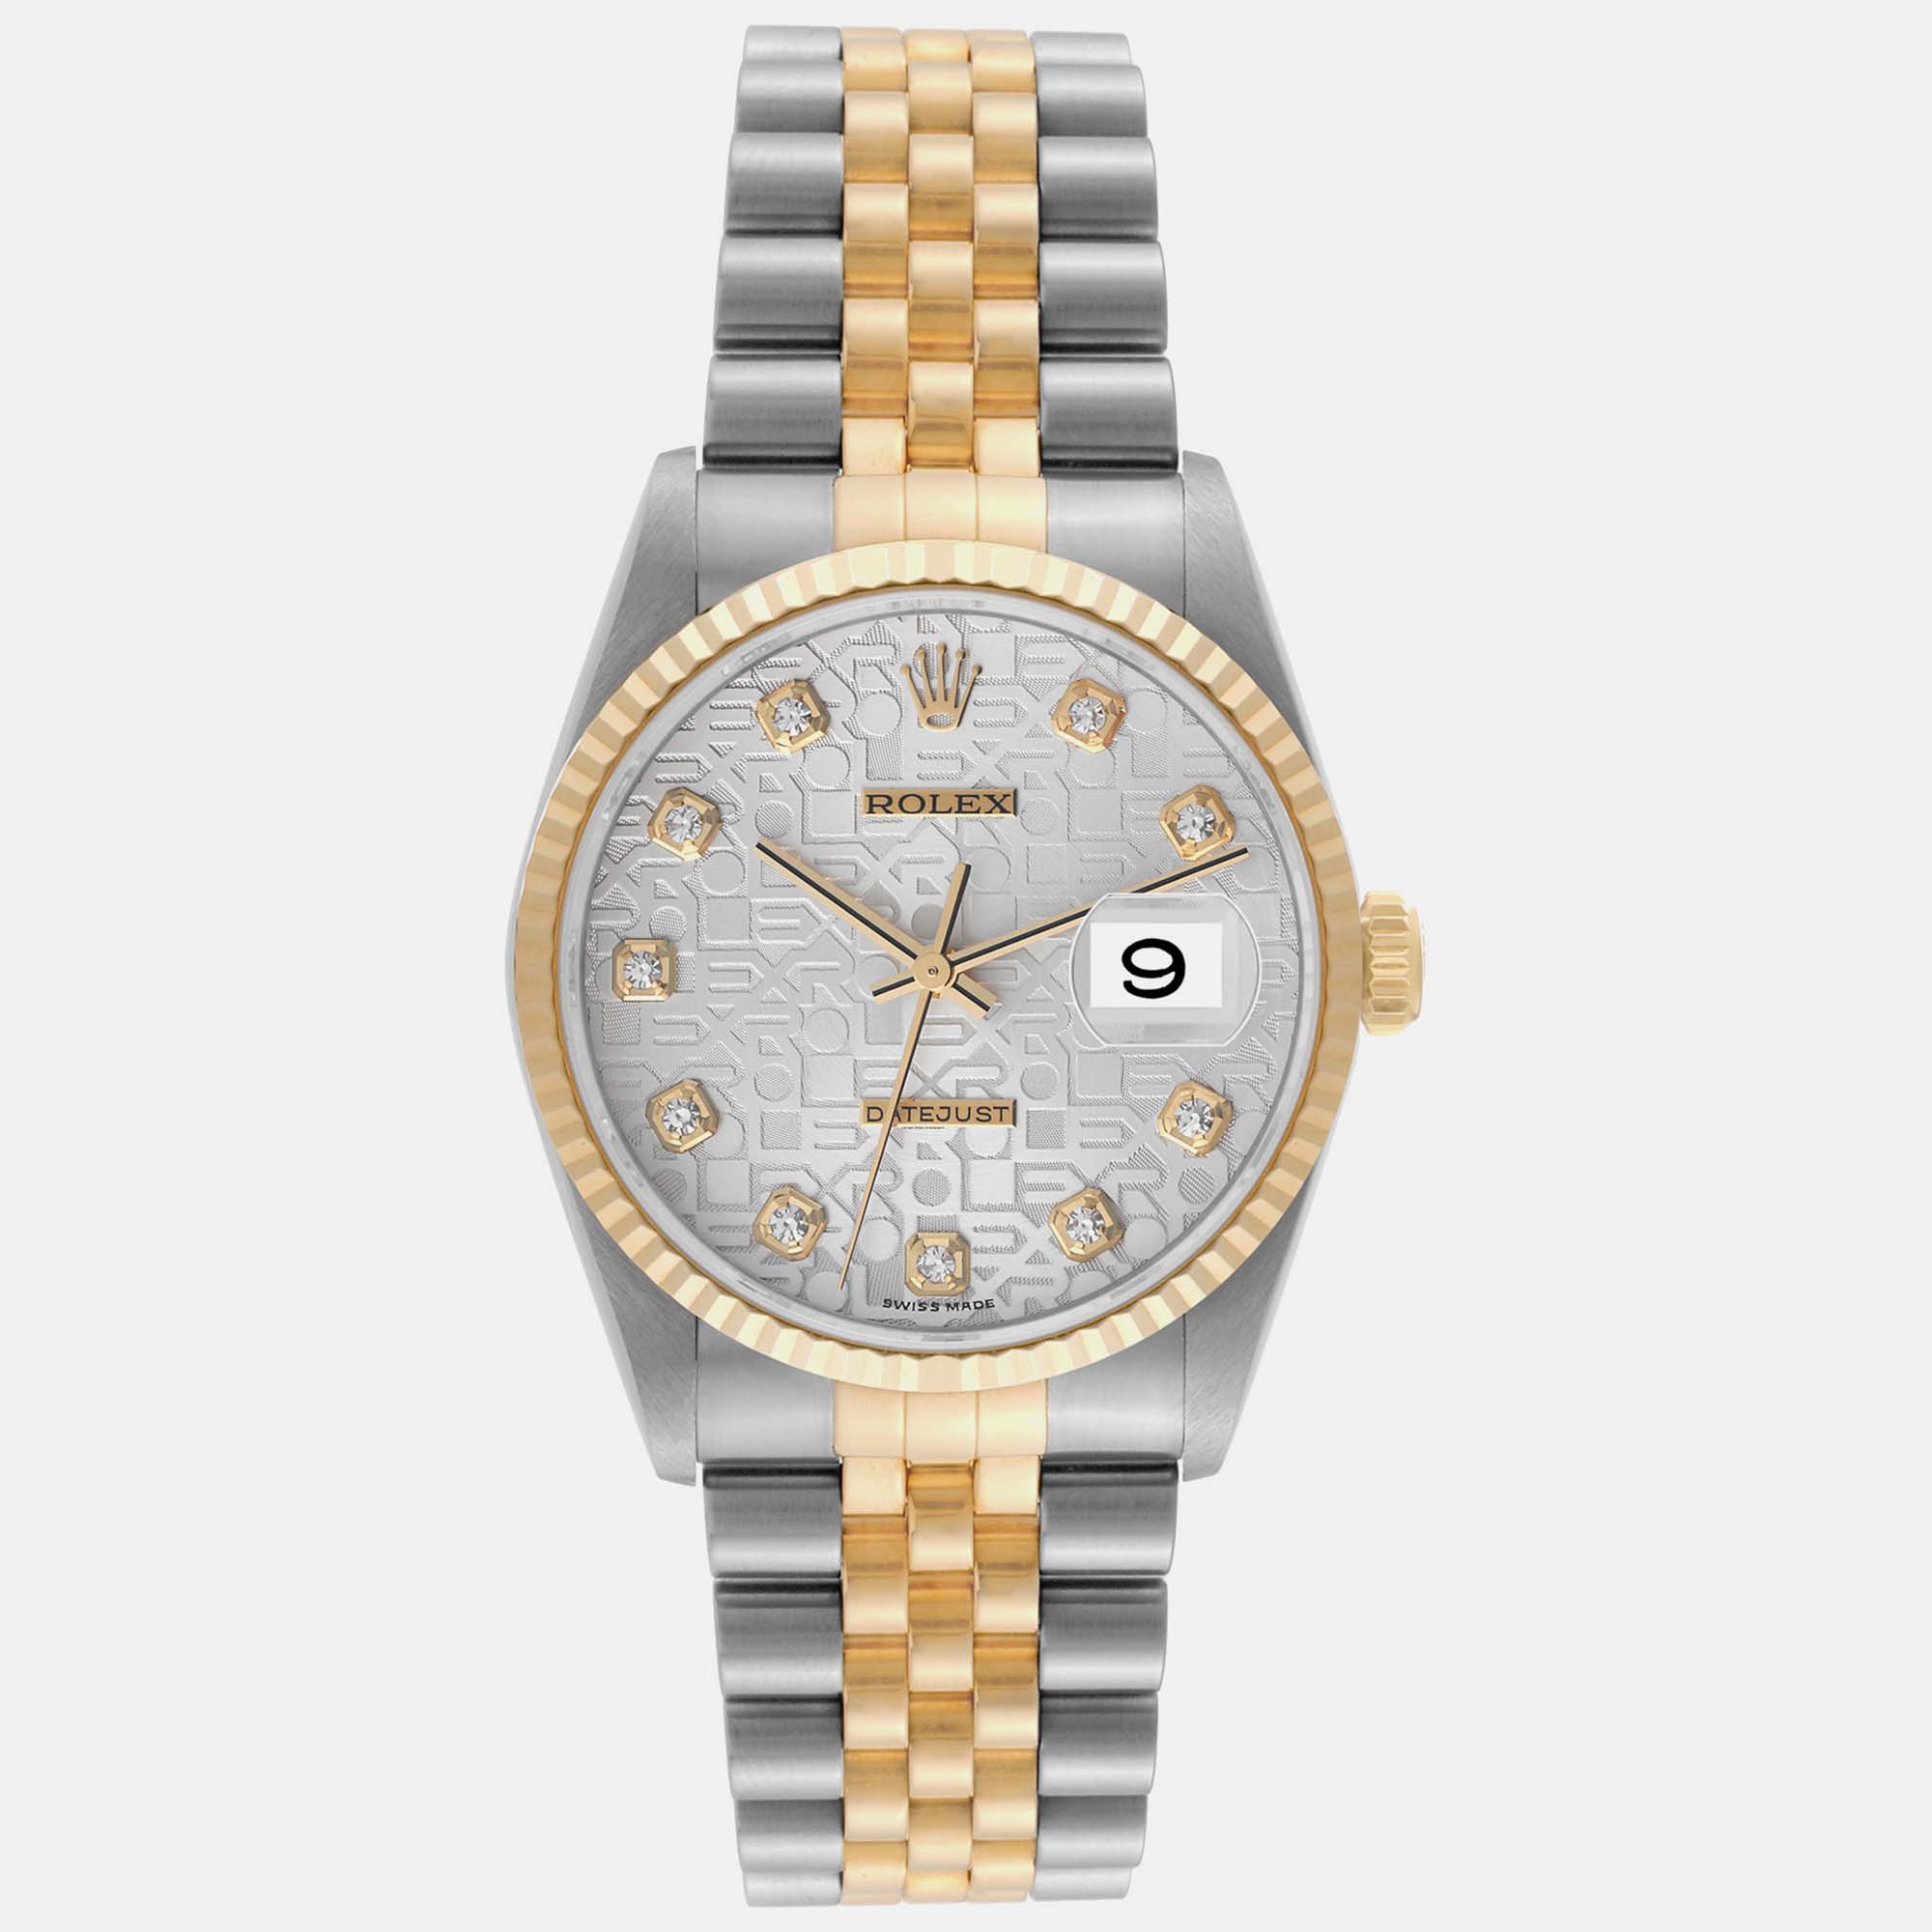 Rolex datejust anniversary diamond dial steel yellow gold men's watch 36 mm